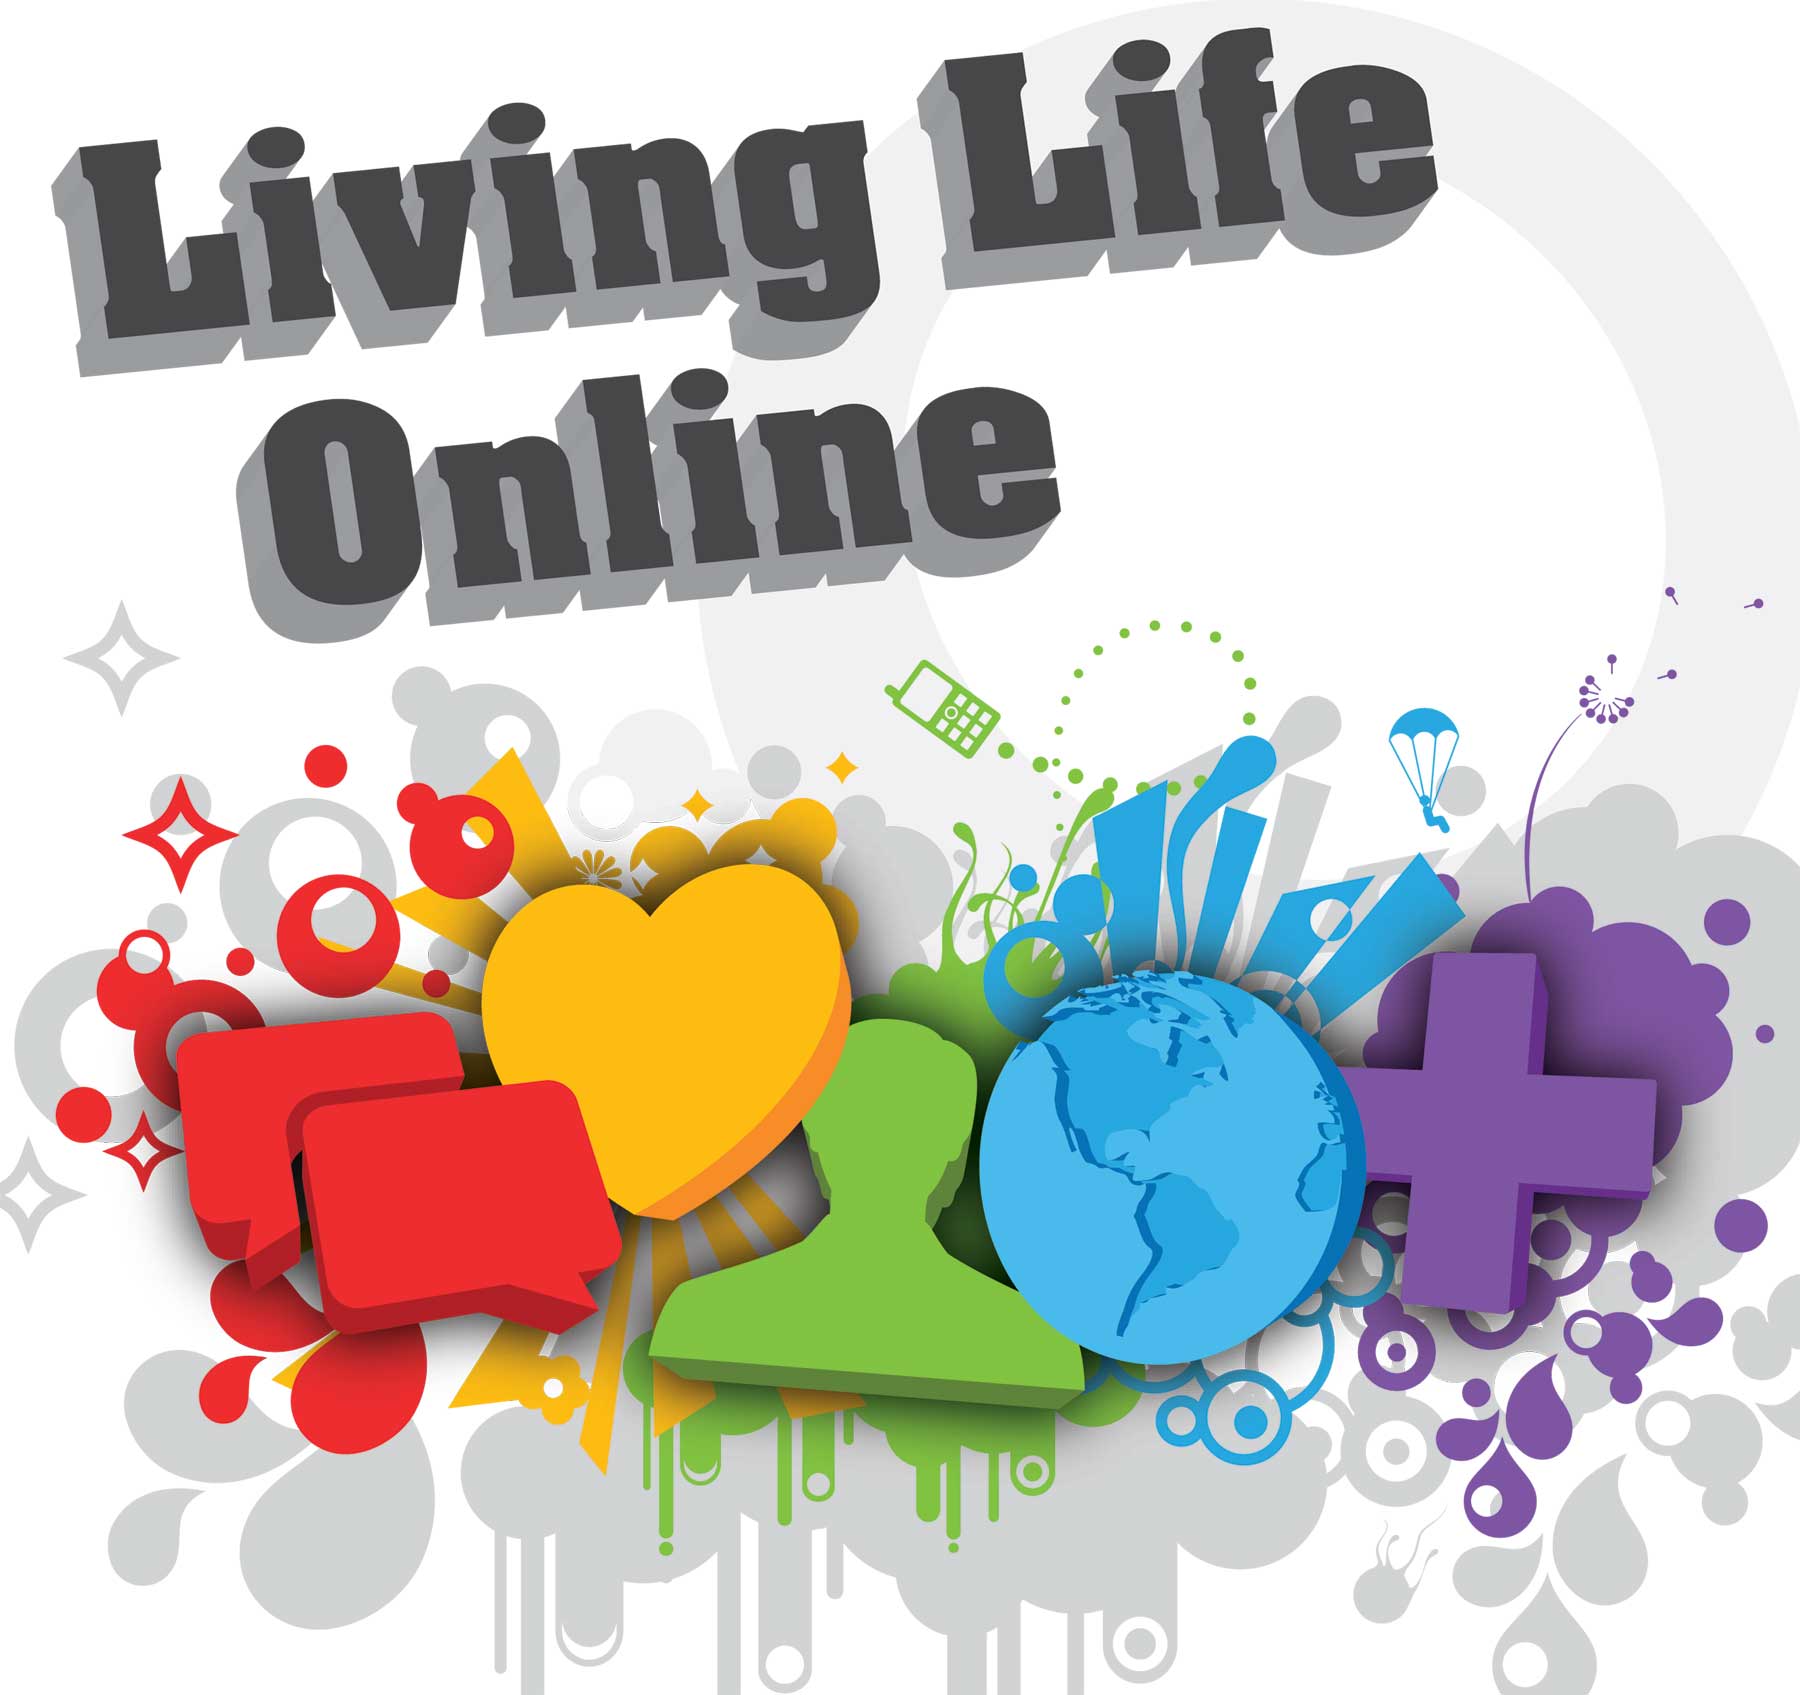 Take Survey: ”Living Life Online”